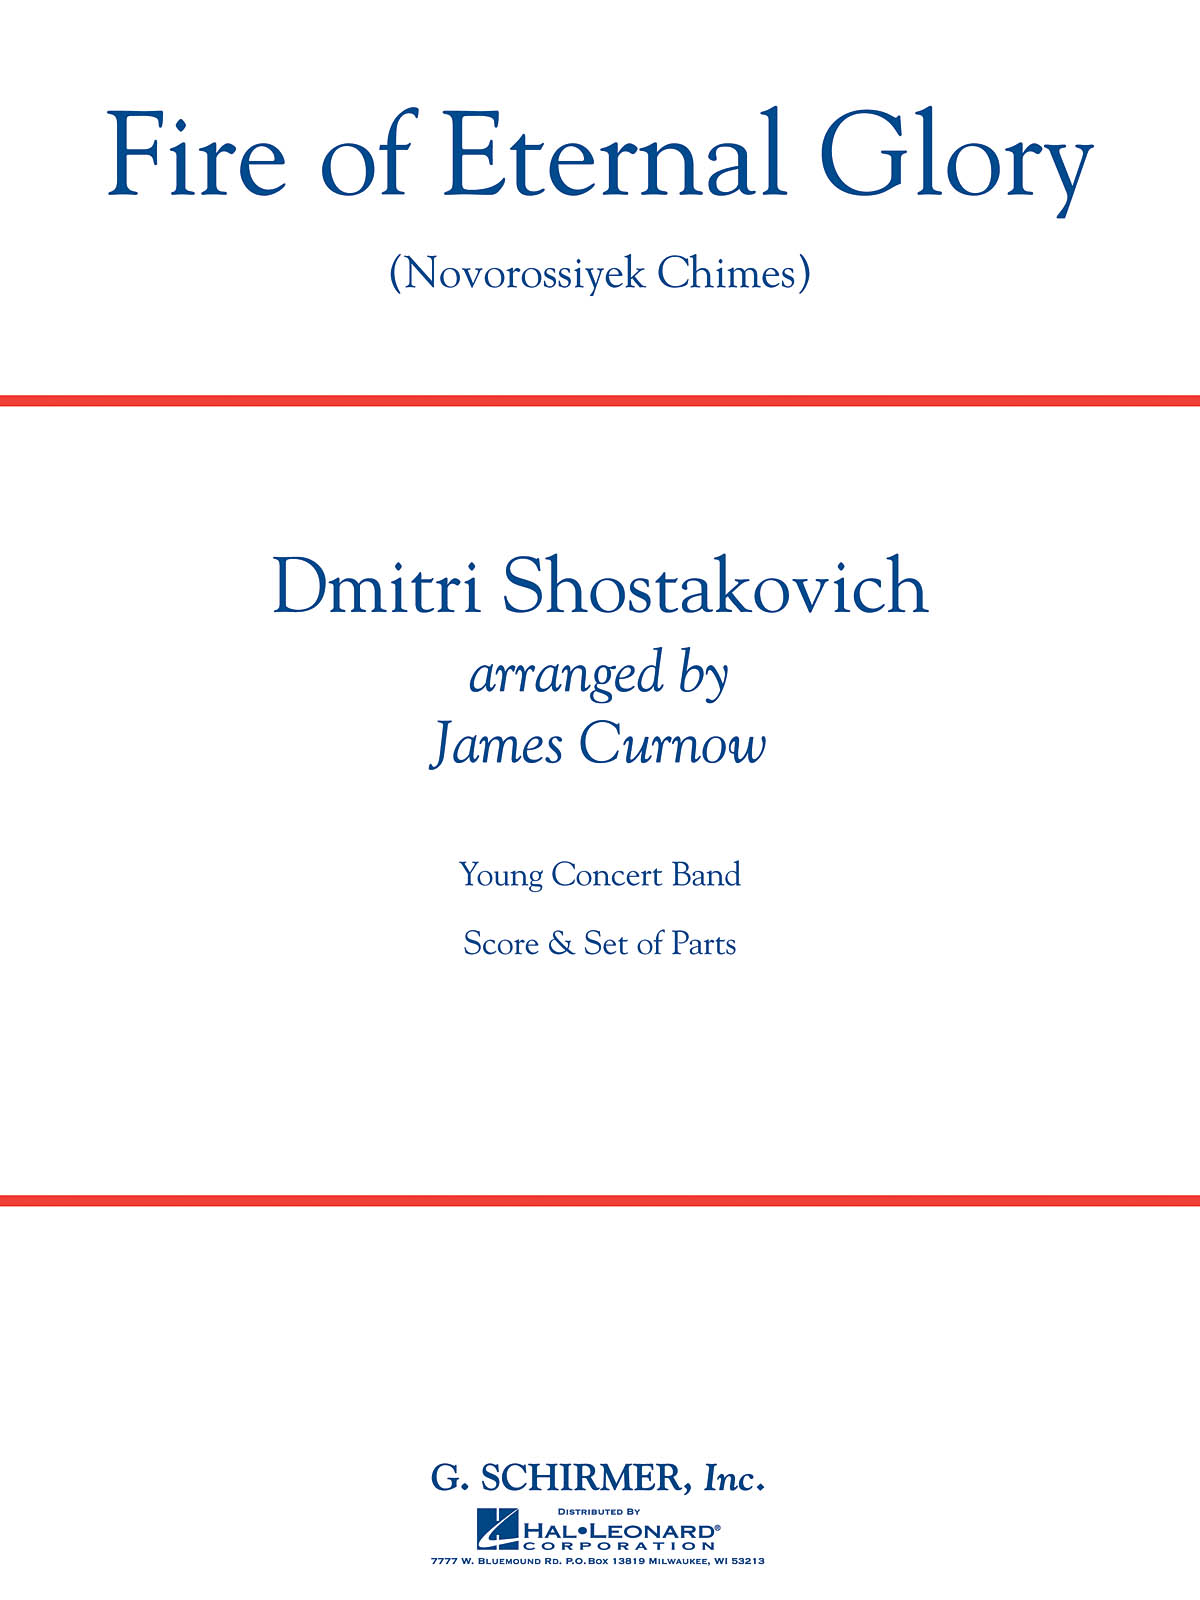 Dimitri Shostakovich: Fire of Eternal Glory (Novorossiyek Chimes): Concert Band: